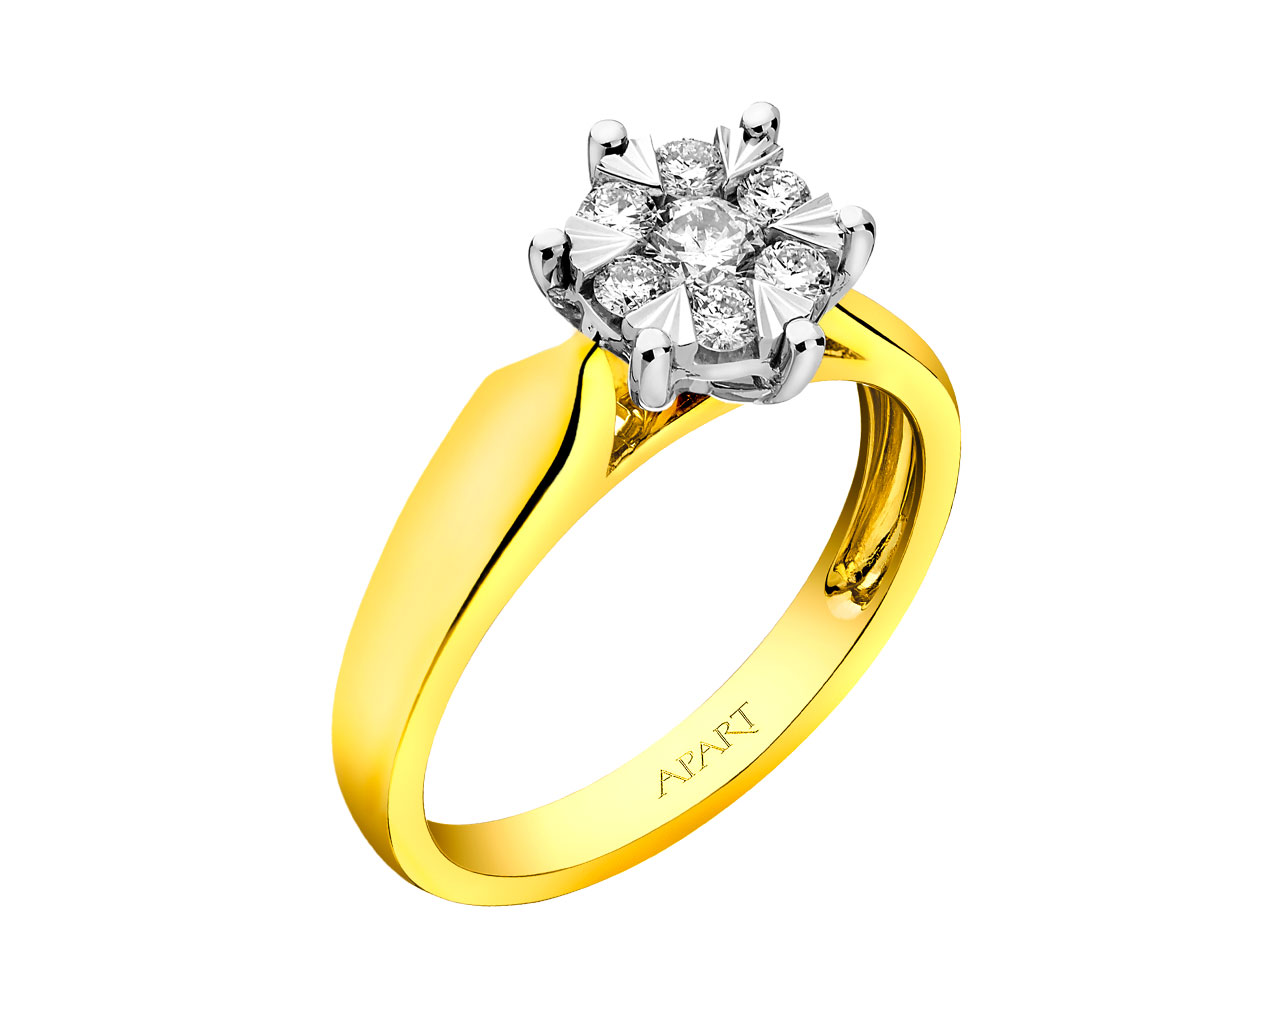 Prsten ze žlutého a bílého zlata s brilianty  0,35 ct - ryzost 585